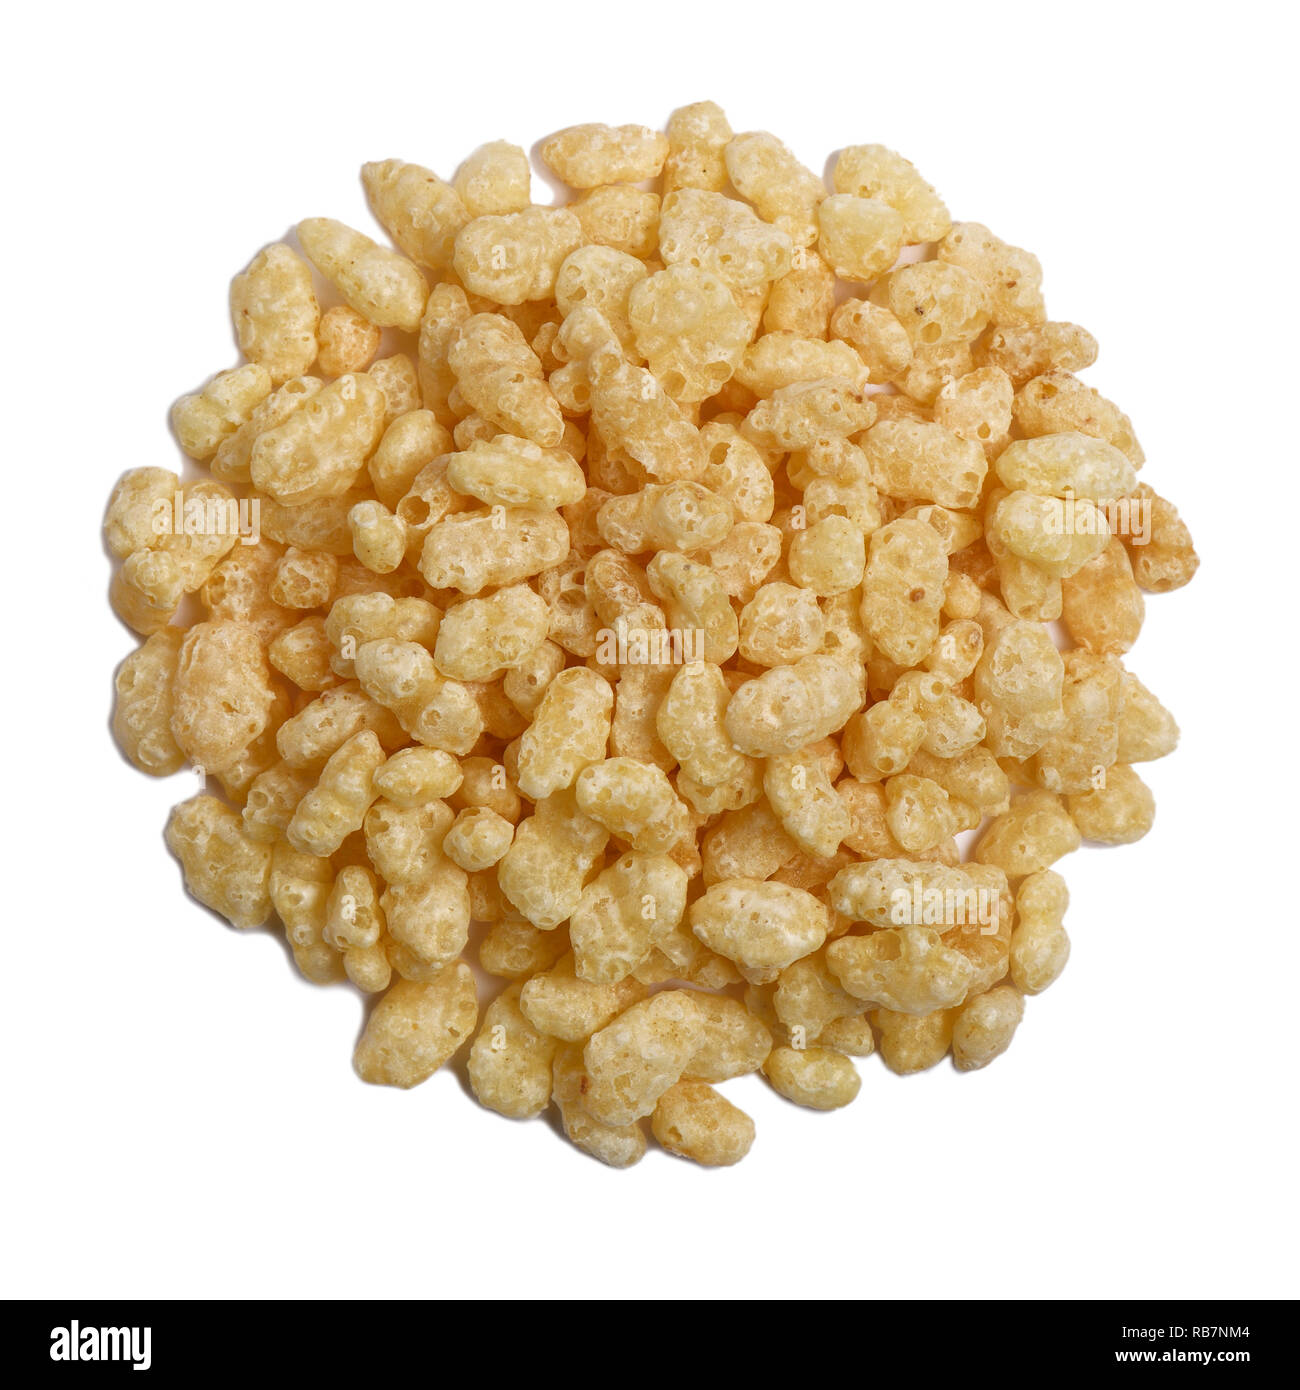 Kellogg's Ricicles breakfast cereal Stock Photo